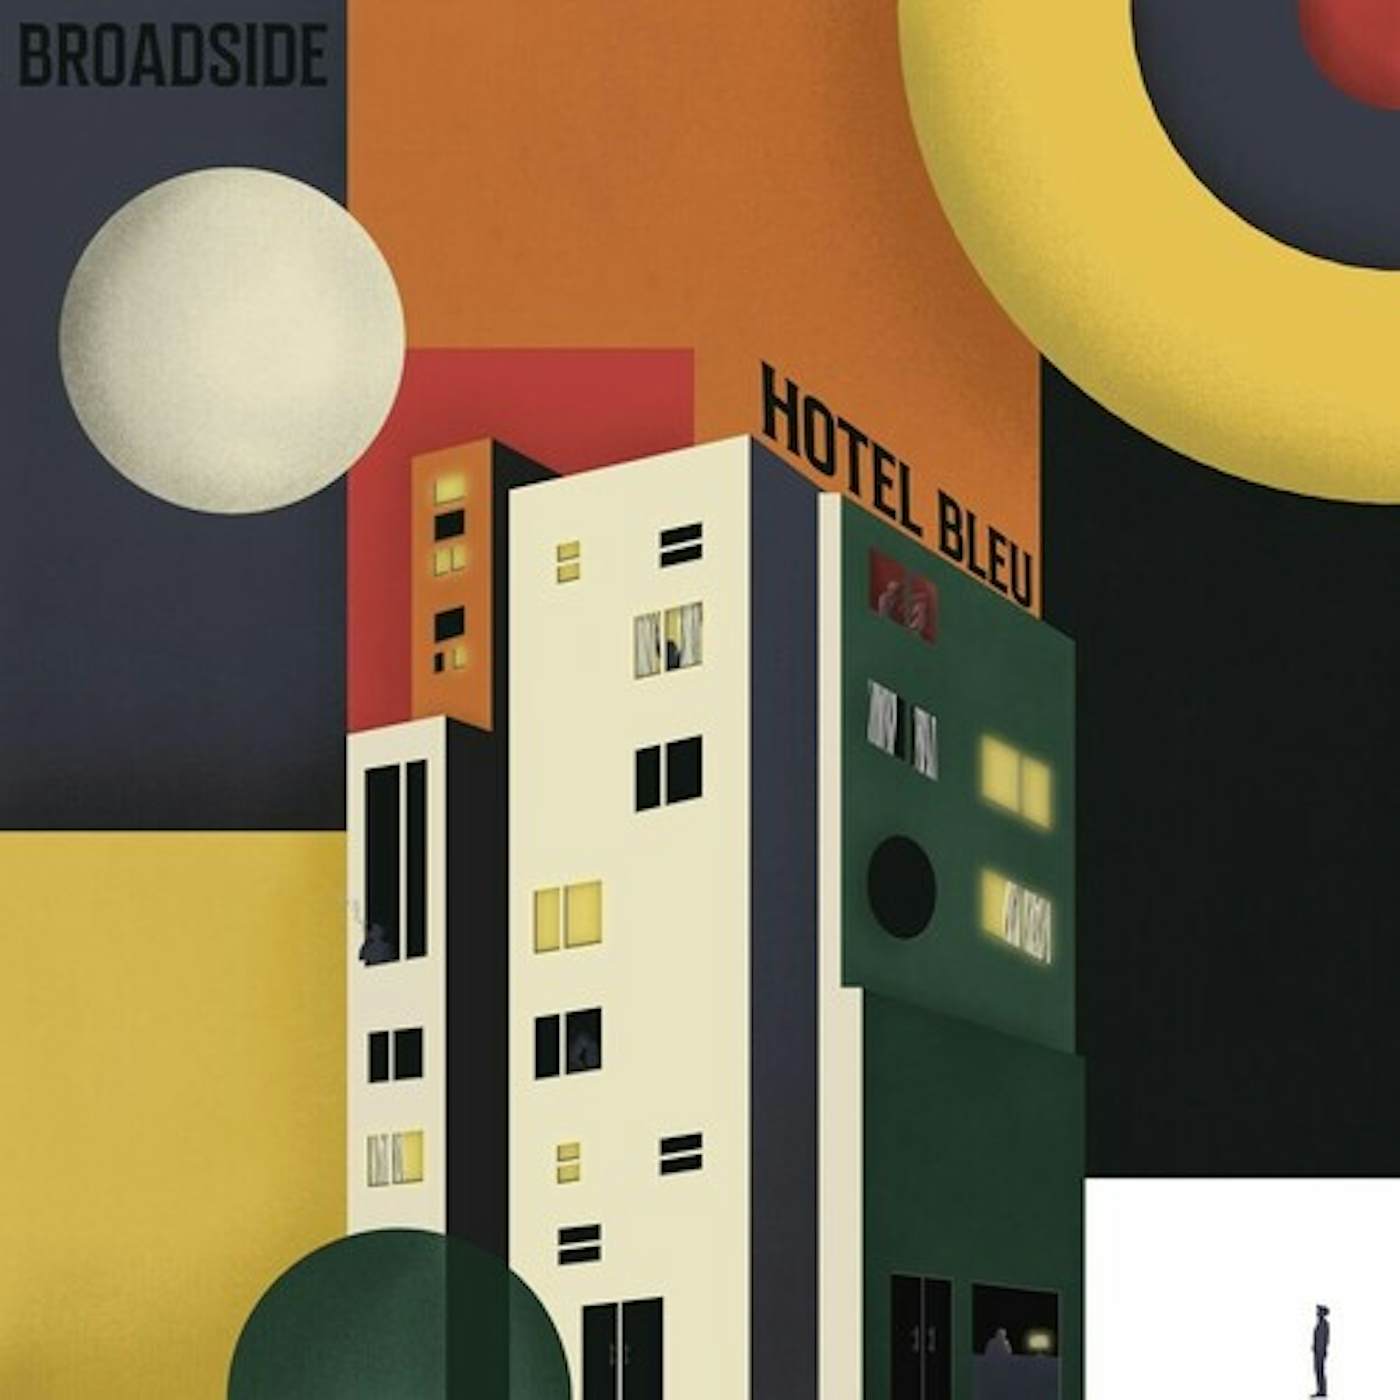 Broadside HOTEL BLEU - GREEN Vinyl Record